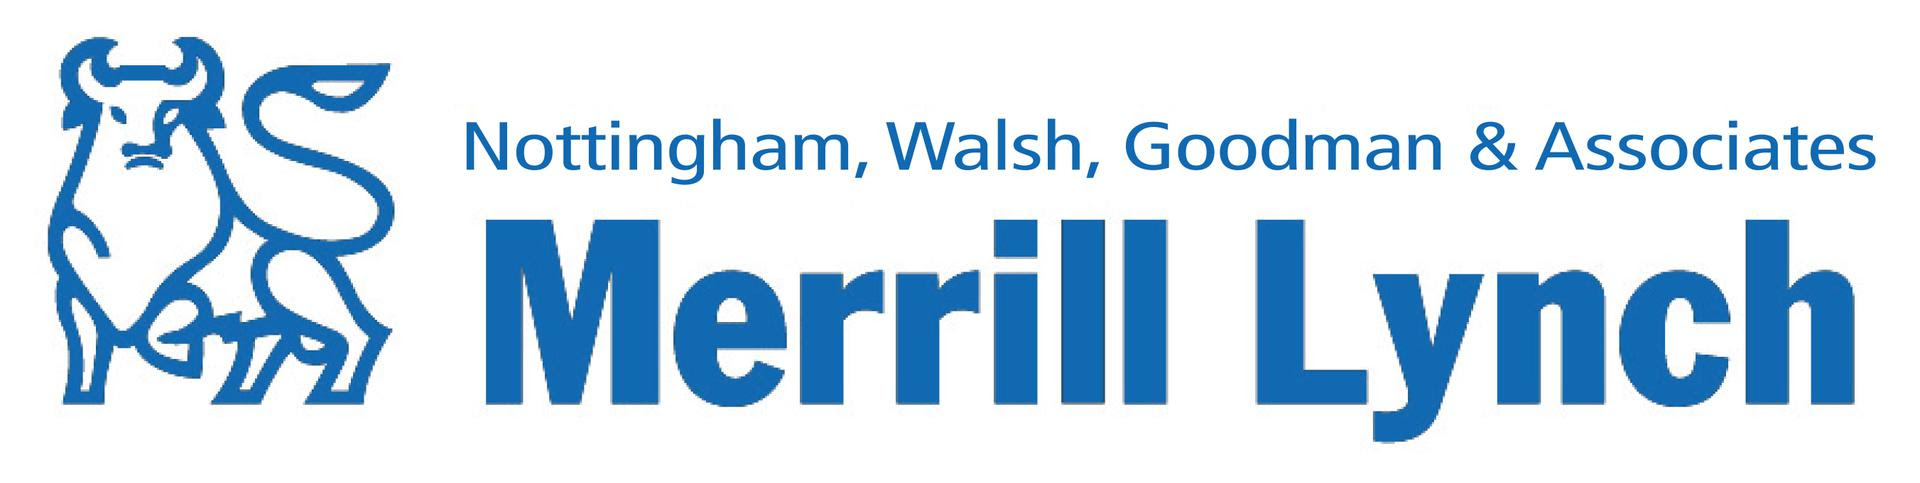 Merrill Lynch-Nottingham, Walsh, Goodman & Associates